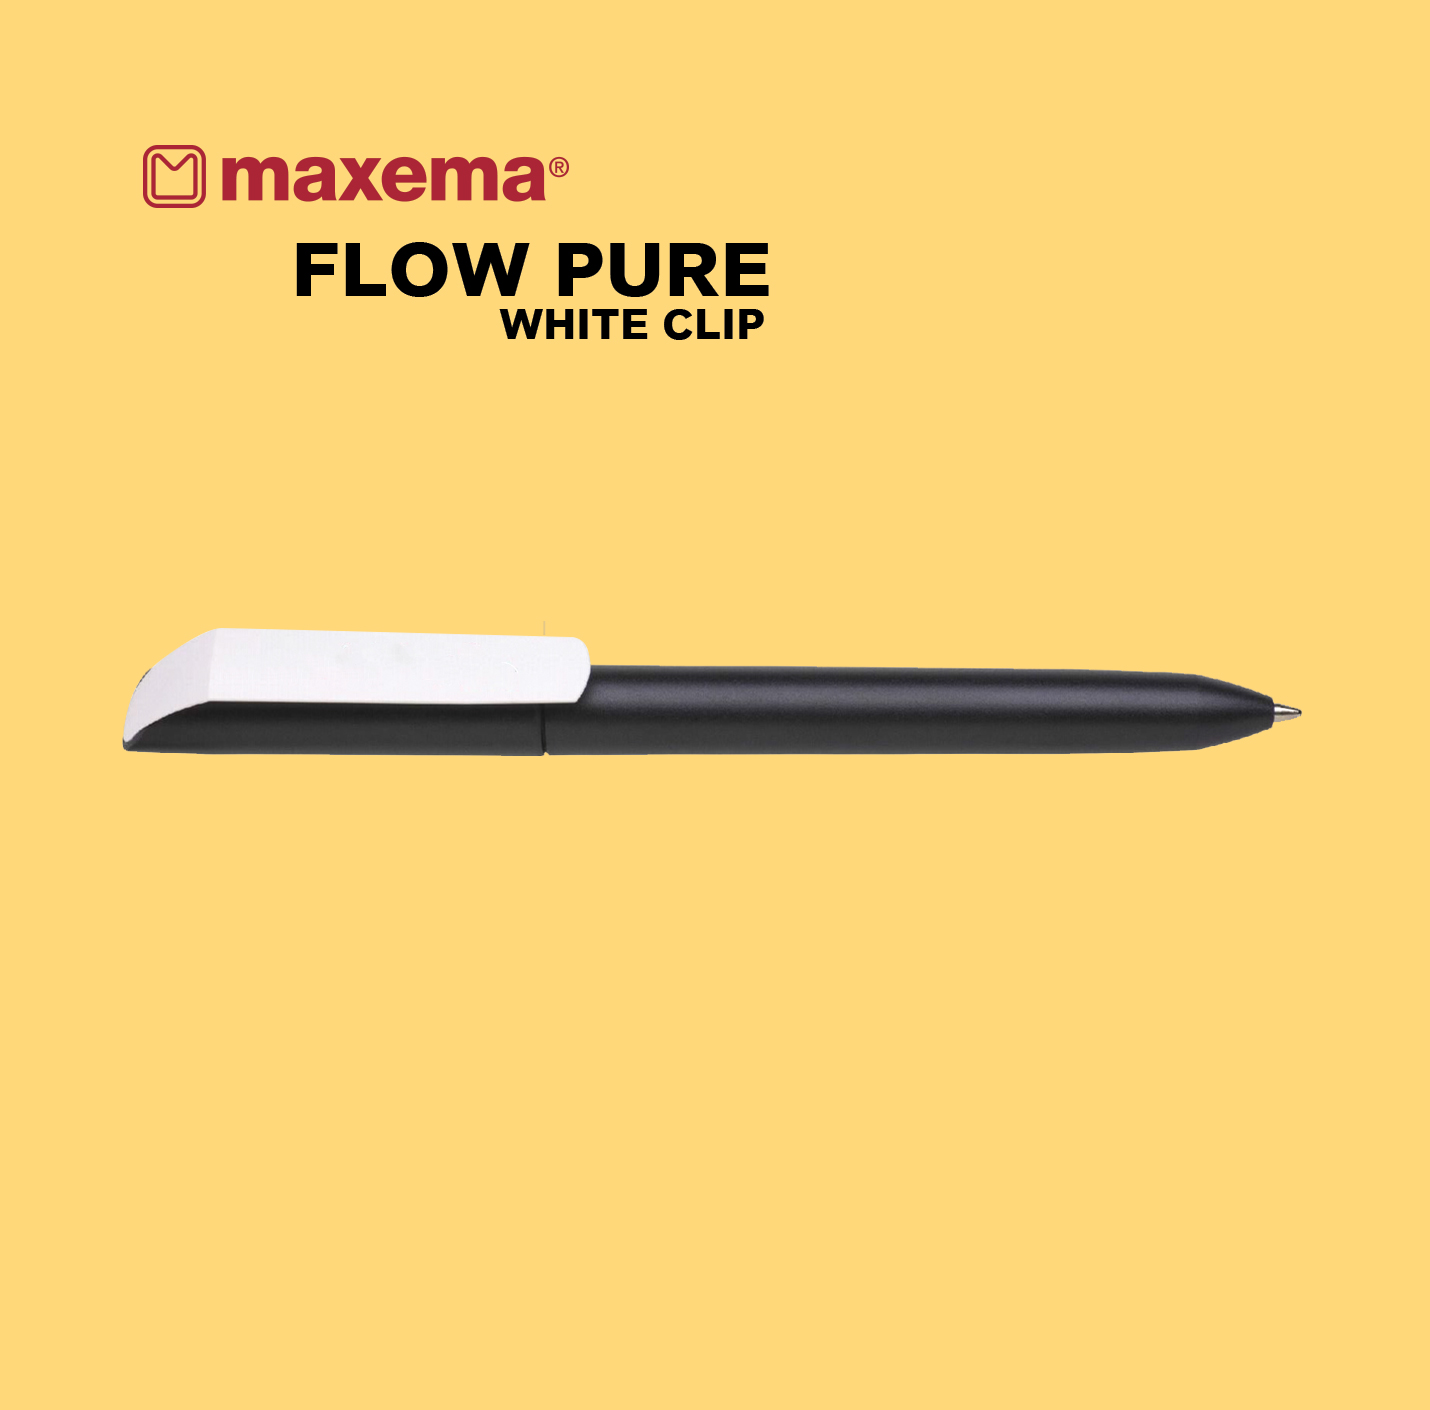 Maxema Pens Flow Pure White Clip